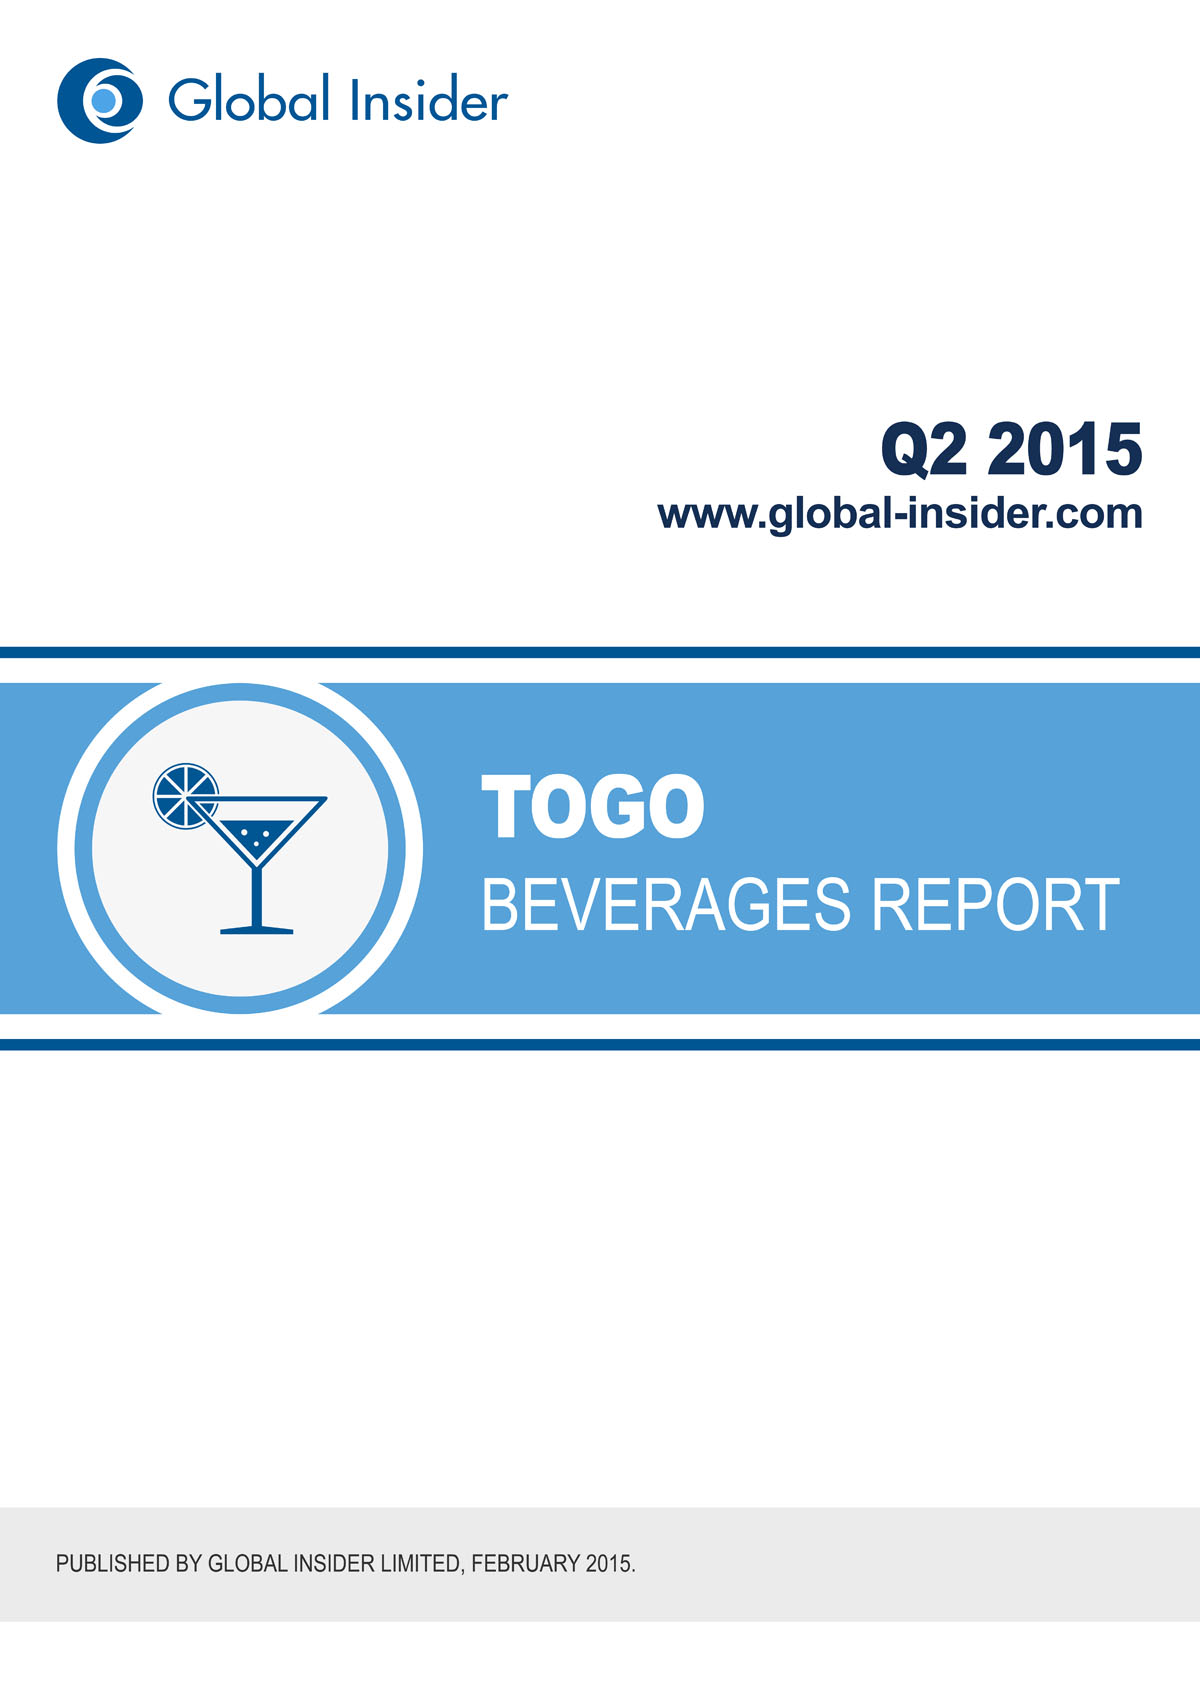 Togo Beverages Report